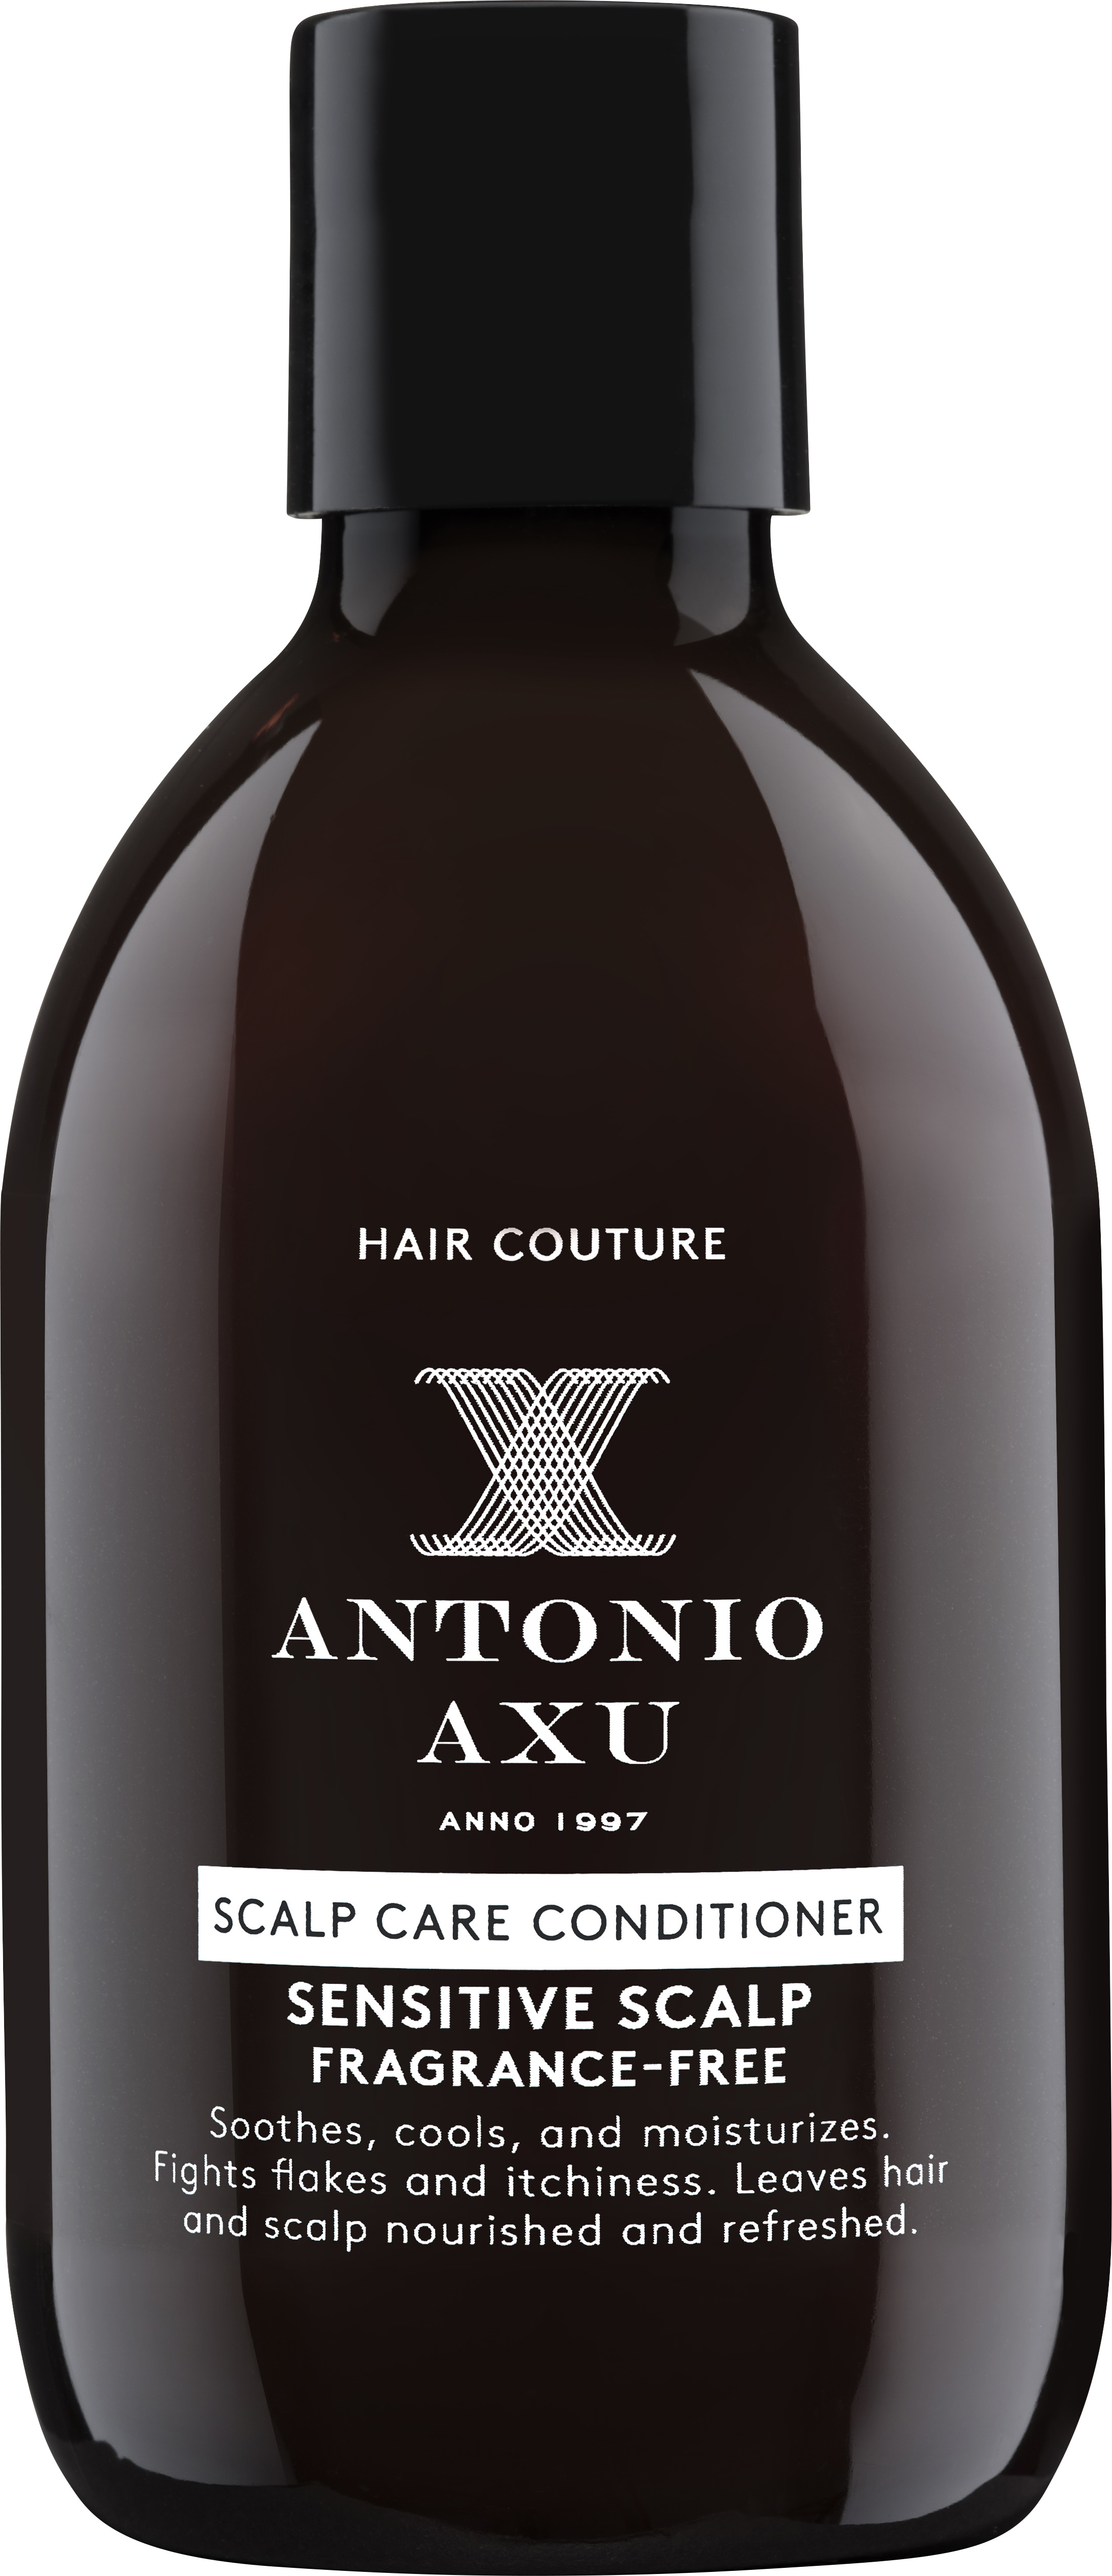 Antonio Axu Scalp Care Conditioner 300 ml